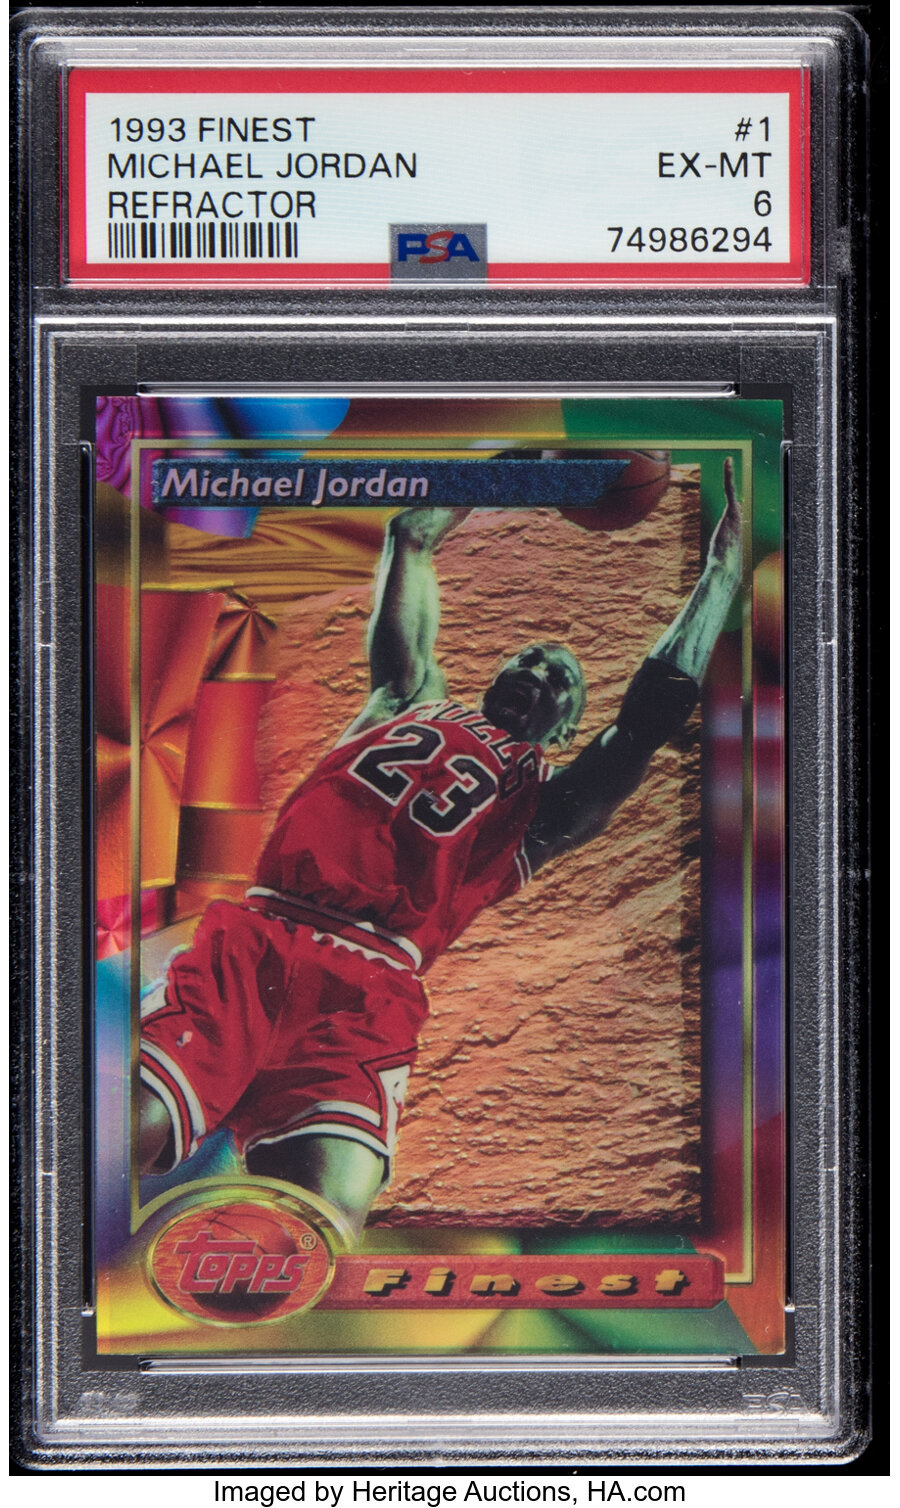 1993 Topps Finest Michael Jordan (Refractor) #1 PSA EX-MT 6